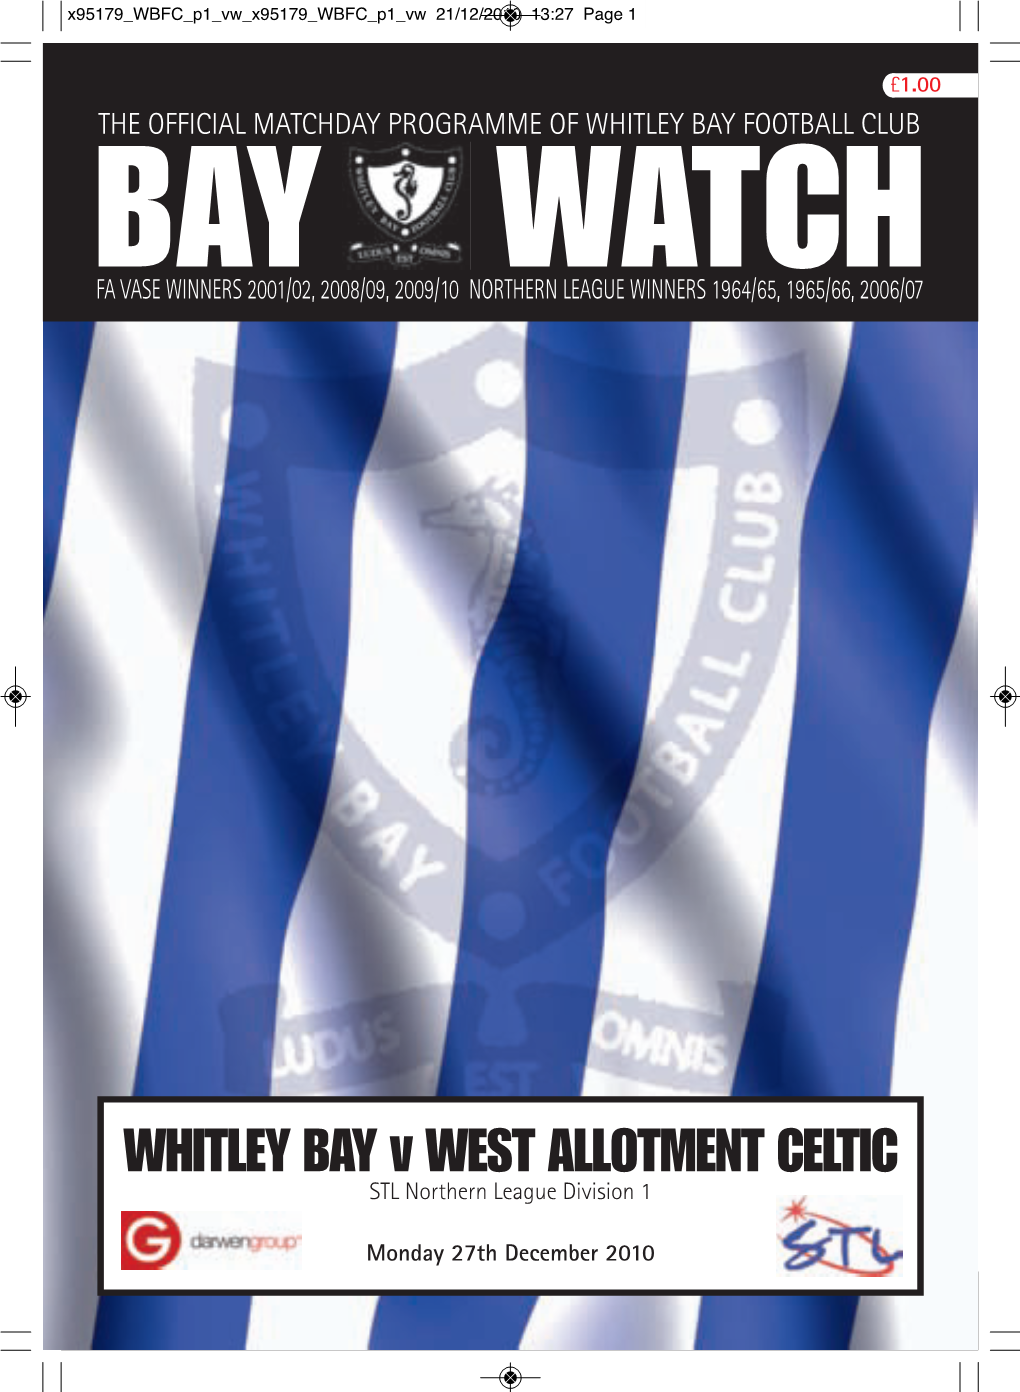 WHITLEY BAY V WEST ALLOTMENT CELTIC STL Northern League Division 1